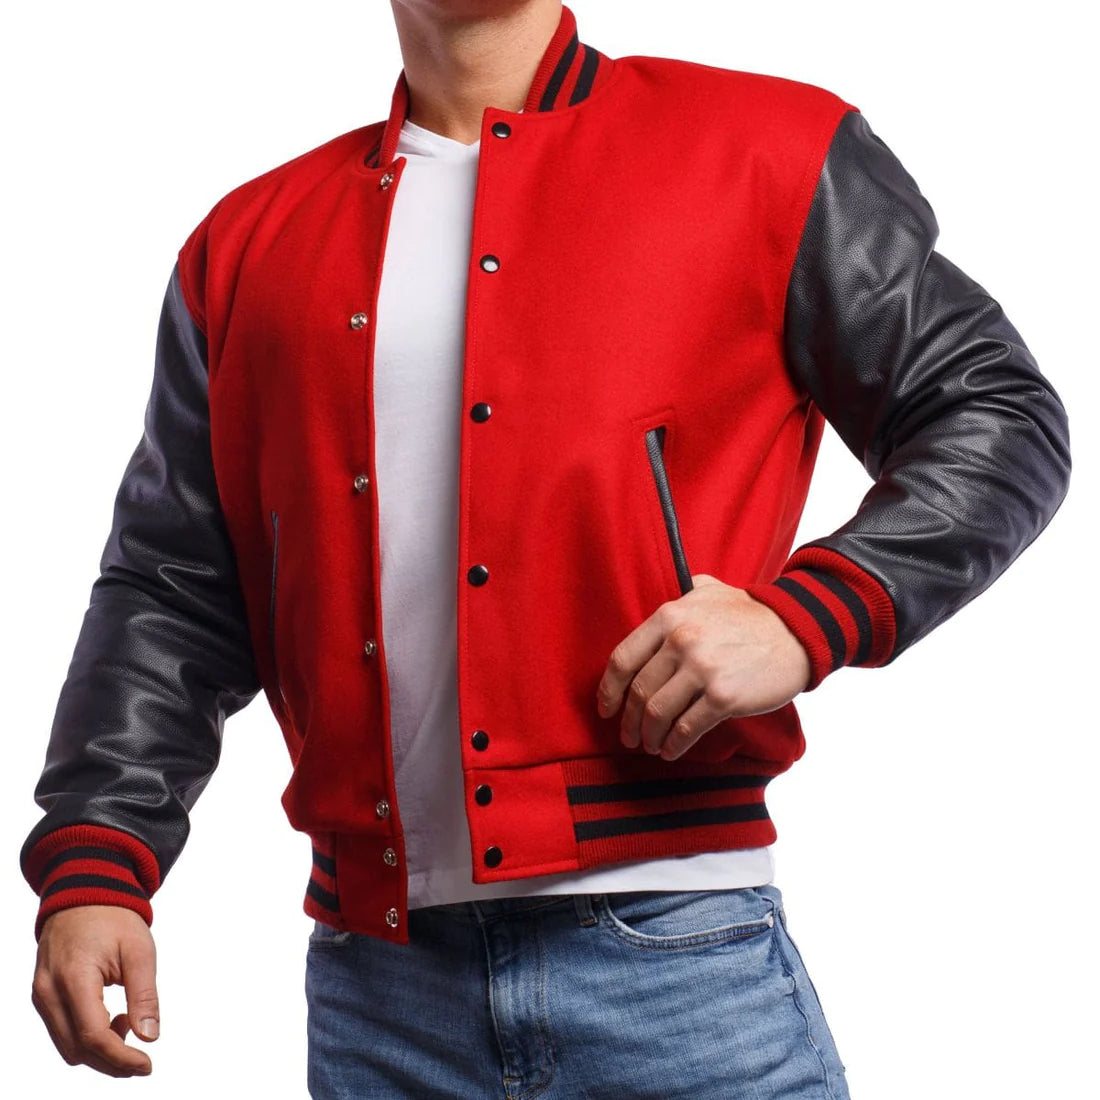 Mens-Red-And-Black-Leather-Varsity-Jacket-Model